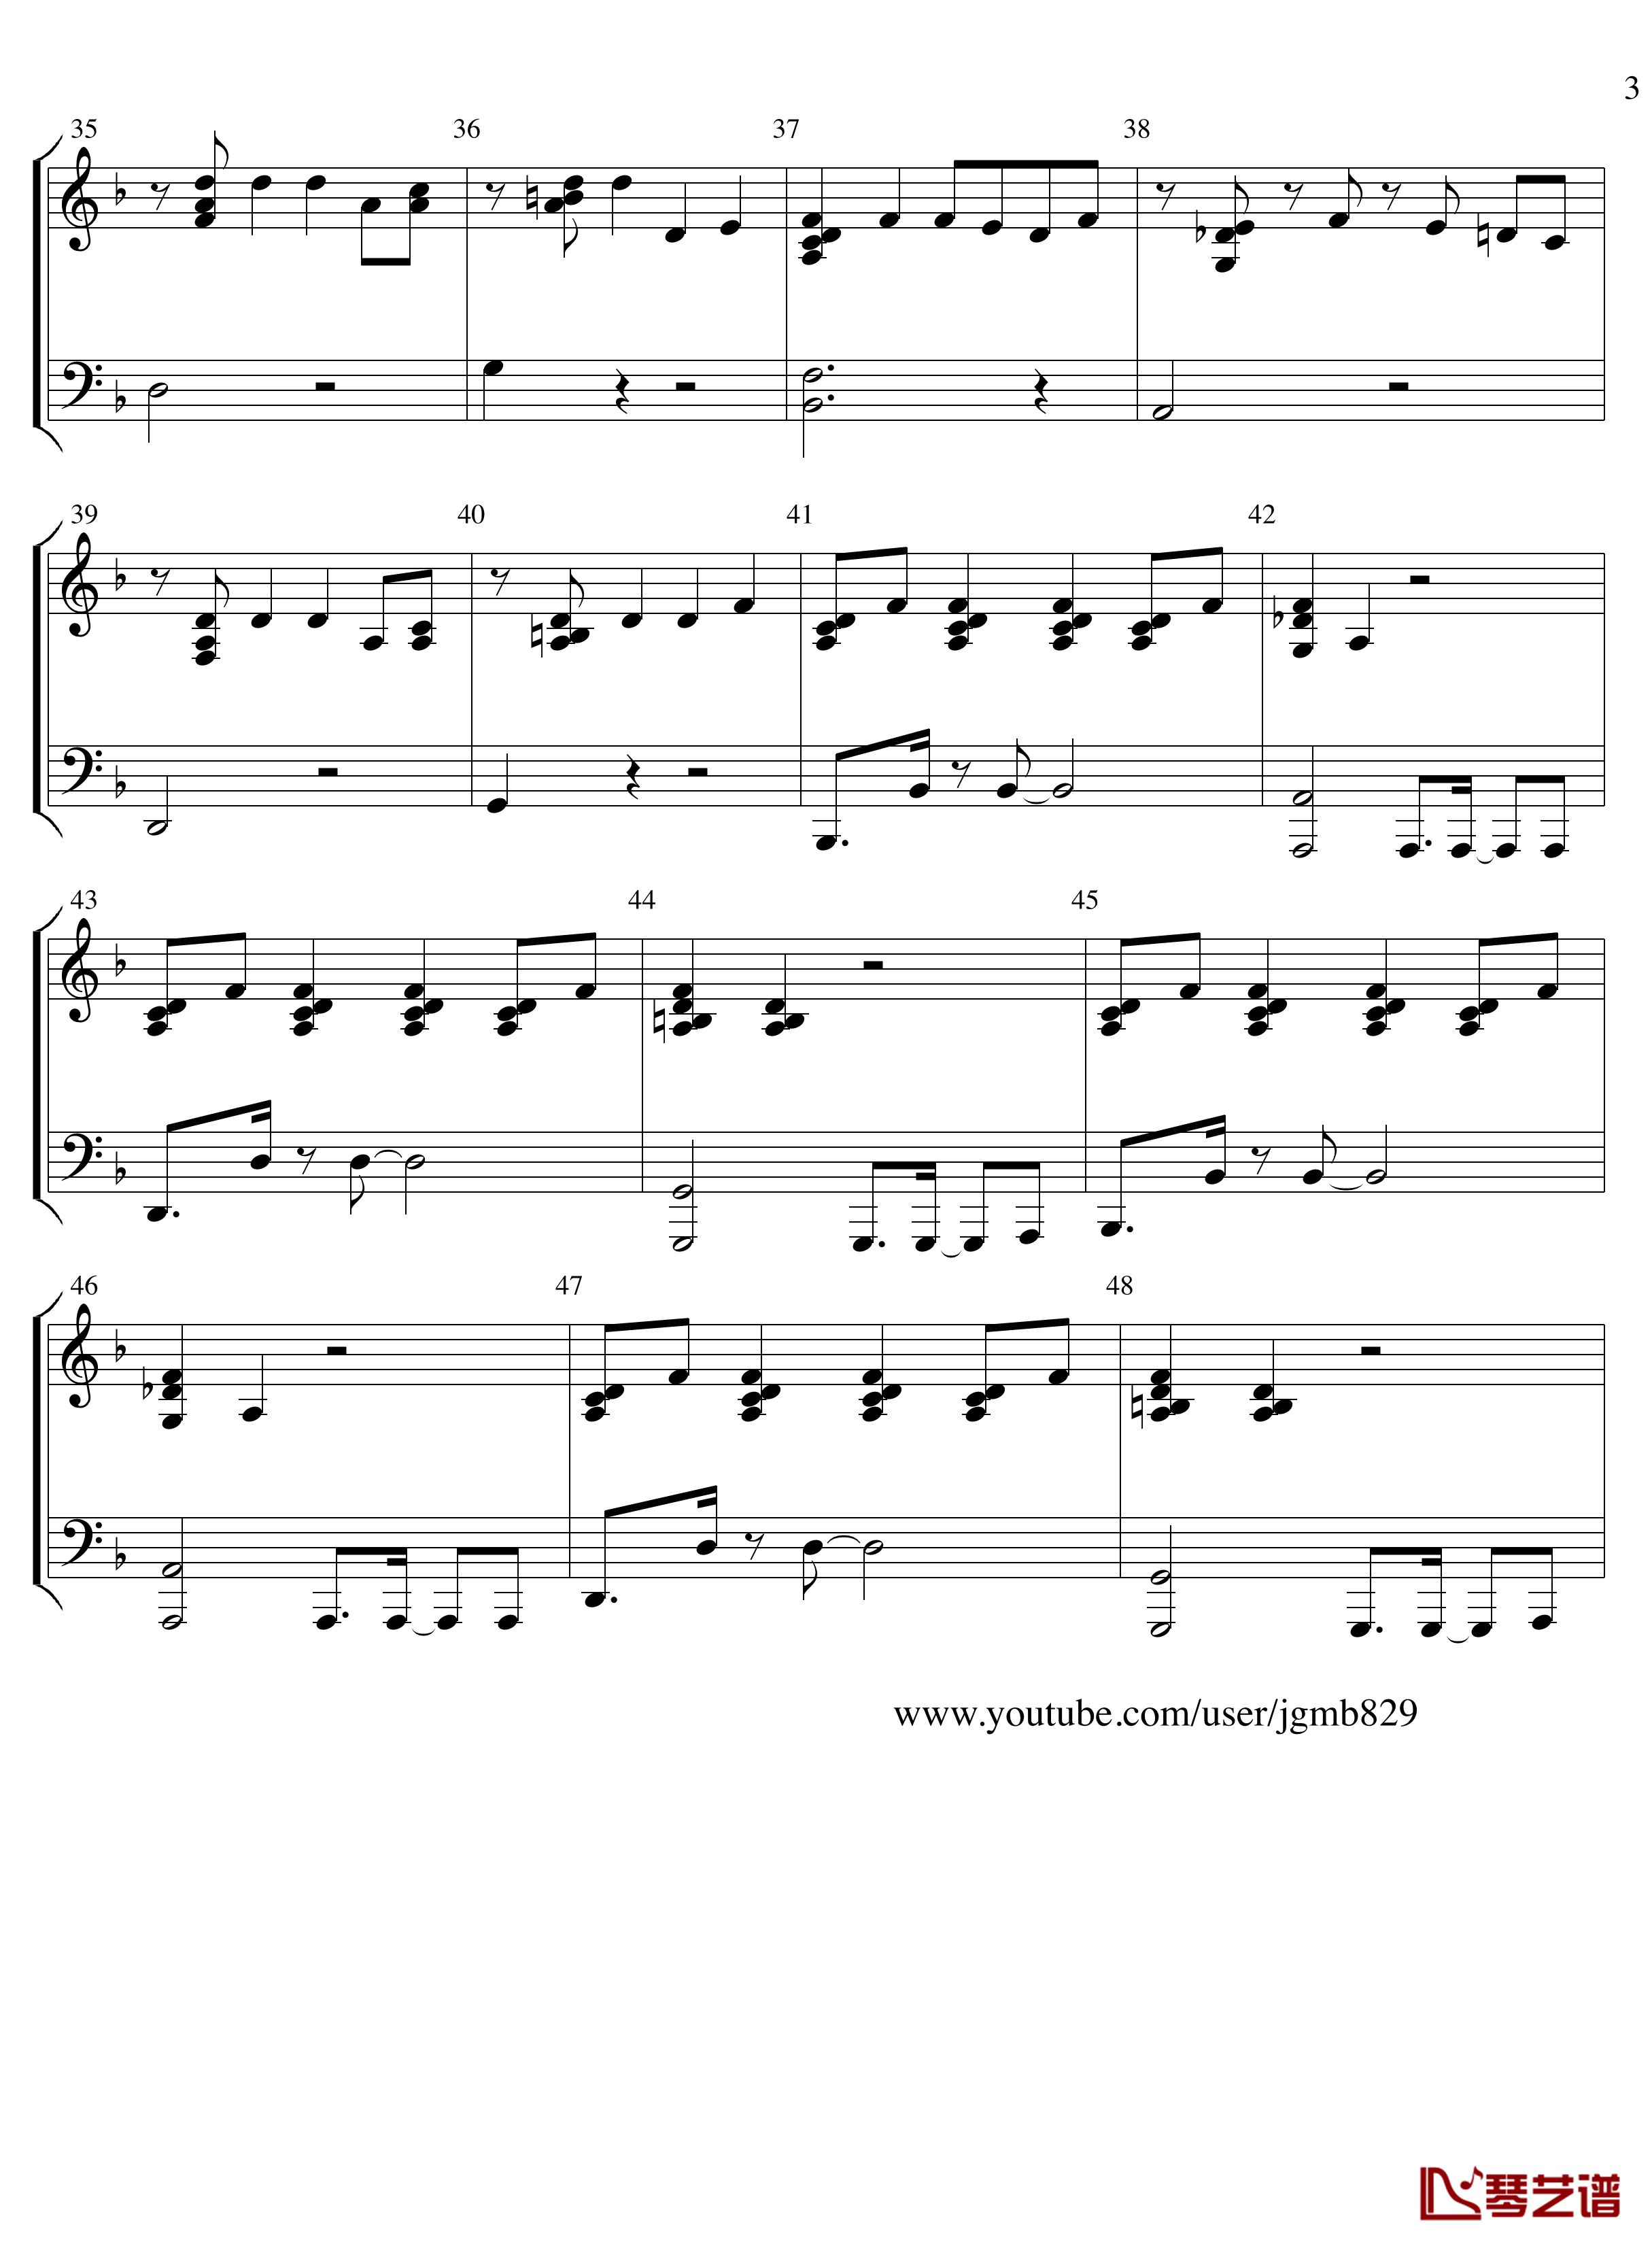 Hands Up钢琴谱-Key of F-2PM3